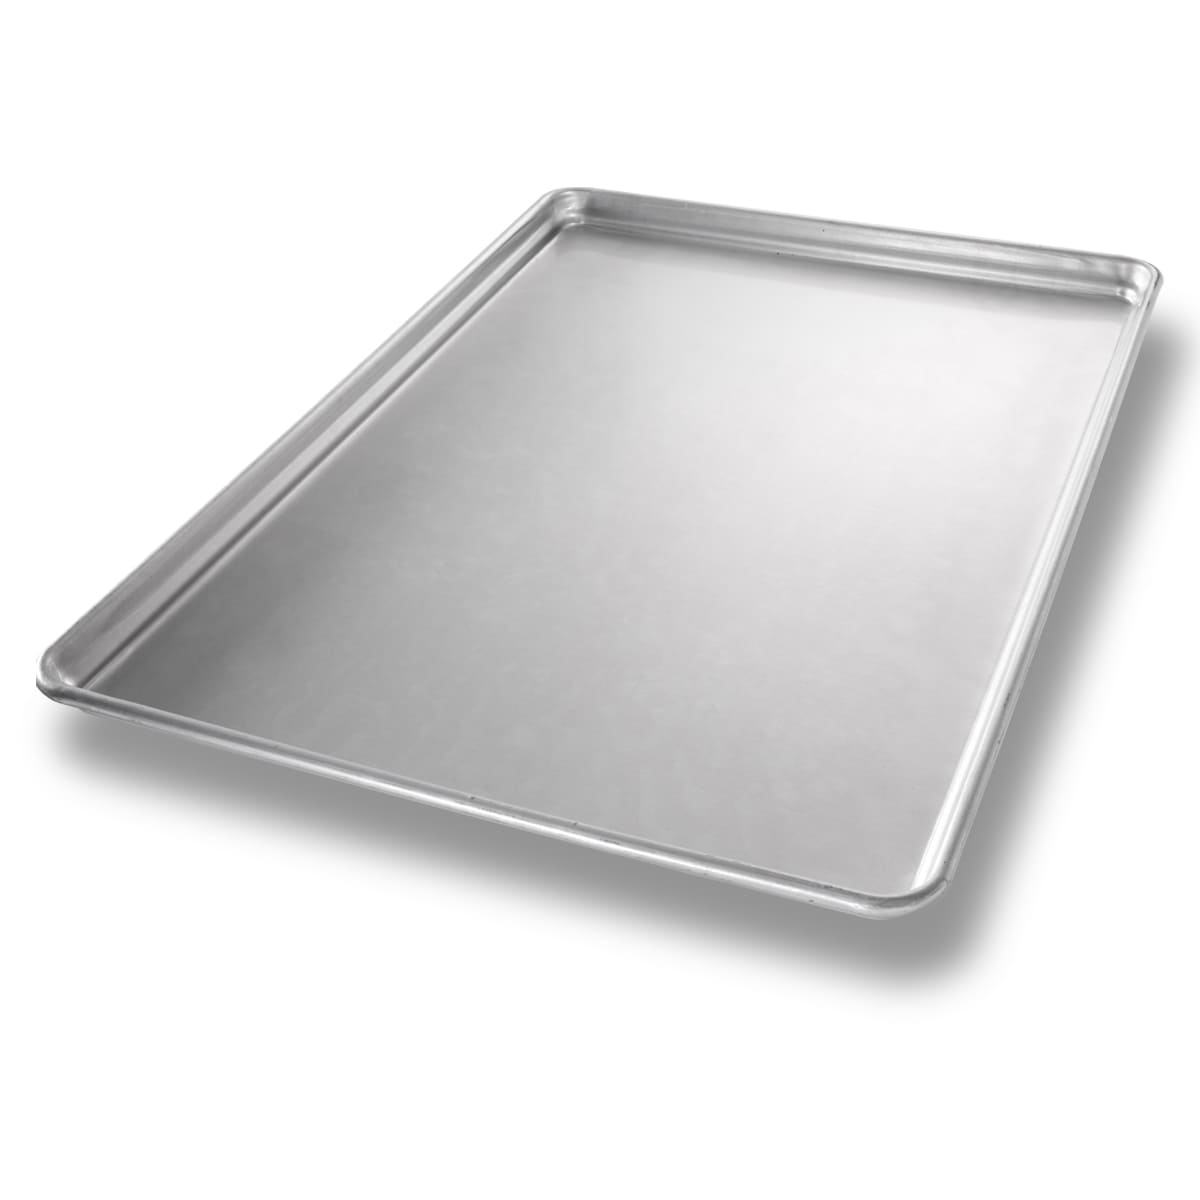 Aluminum baking trays